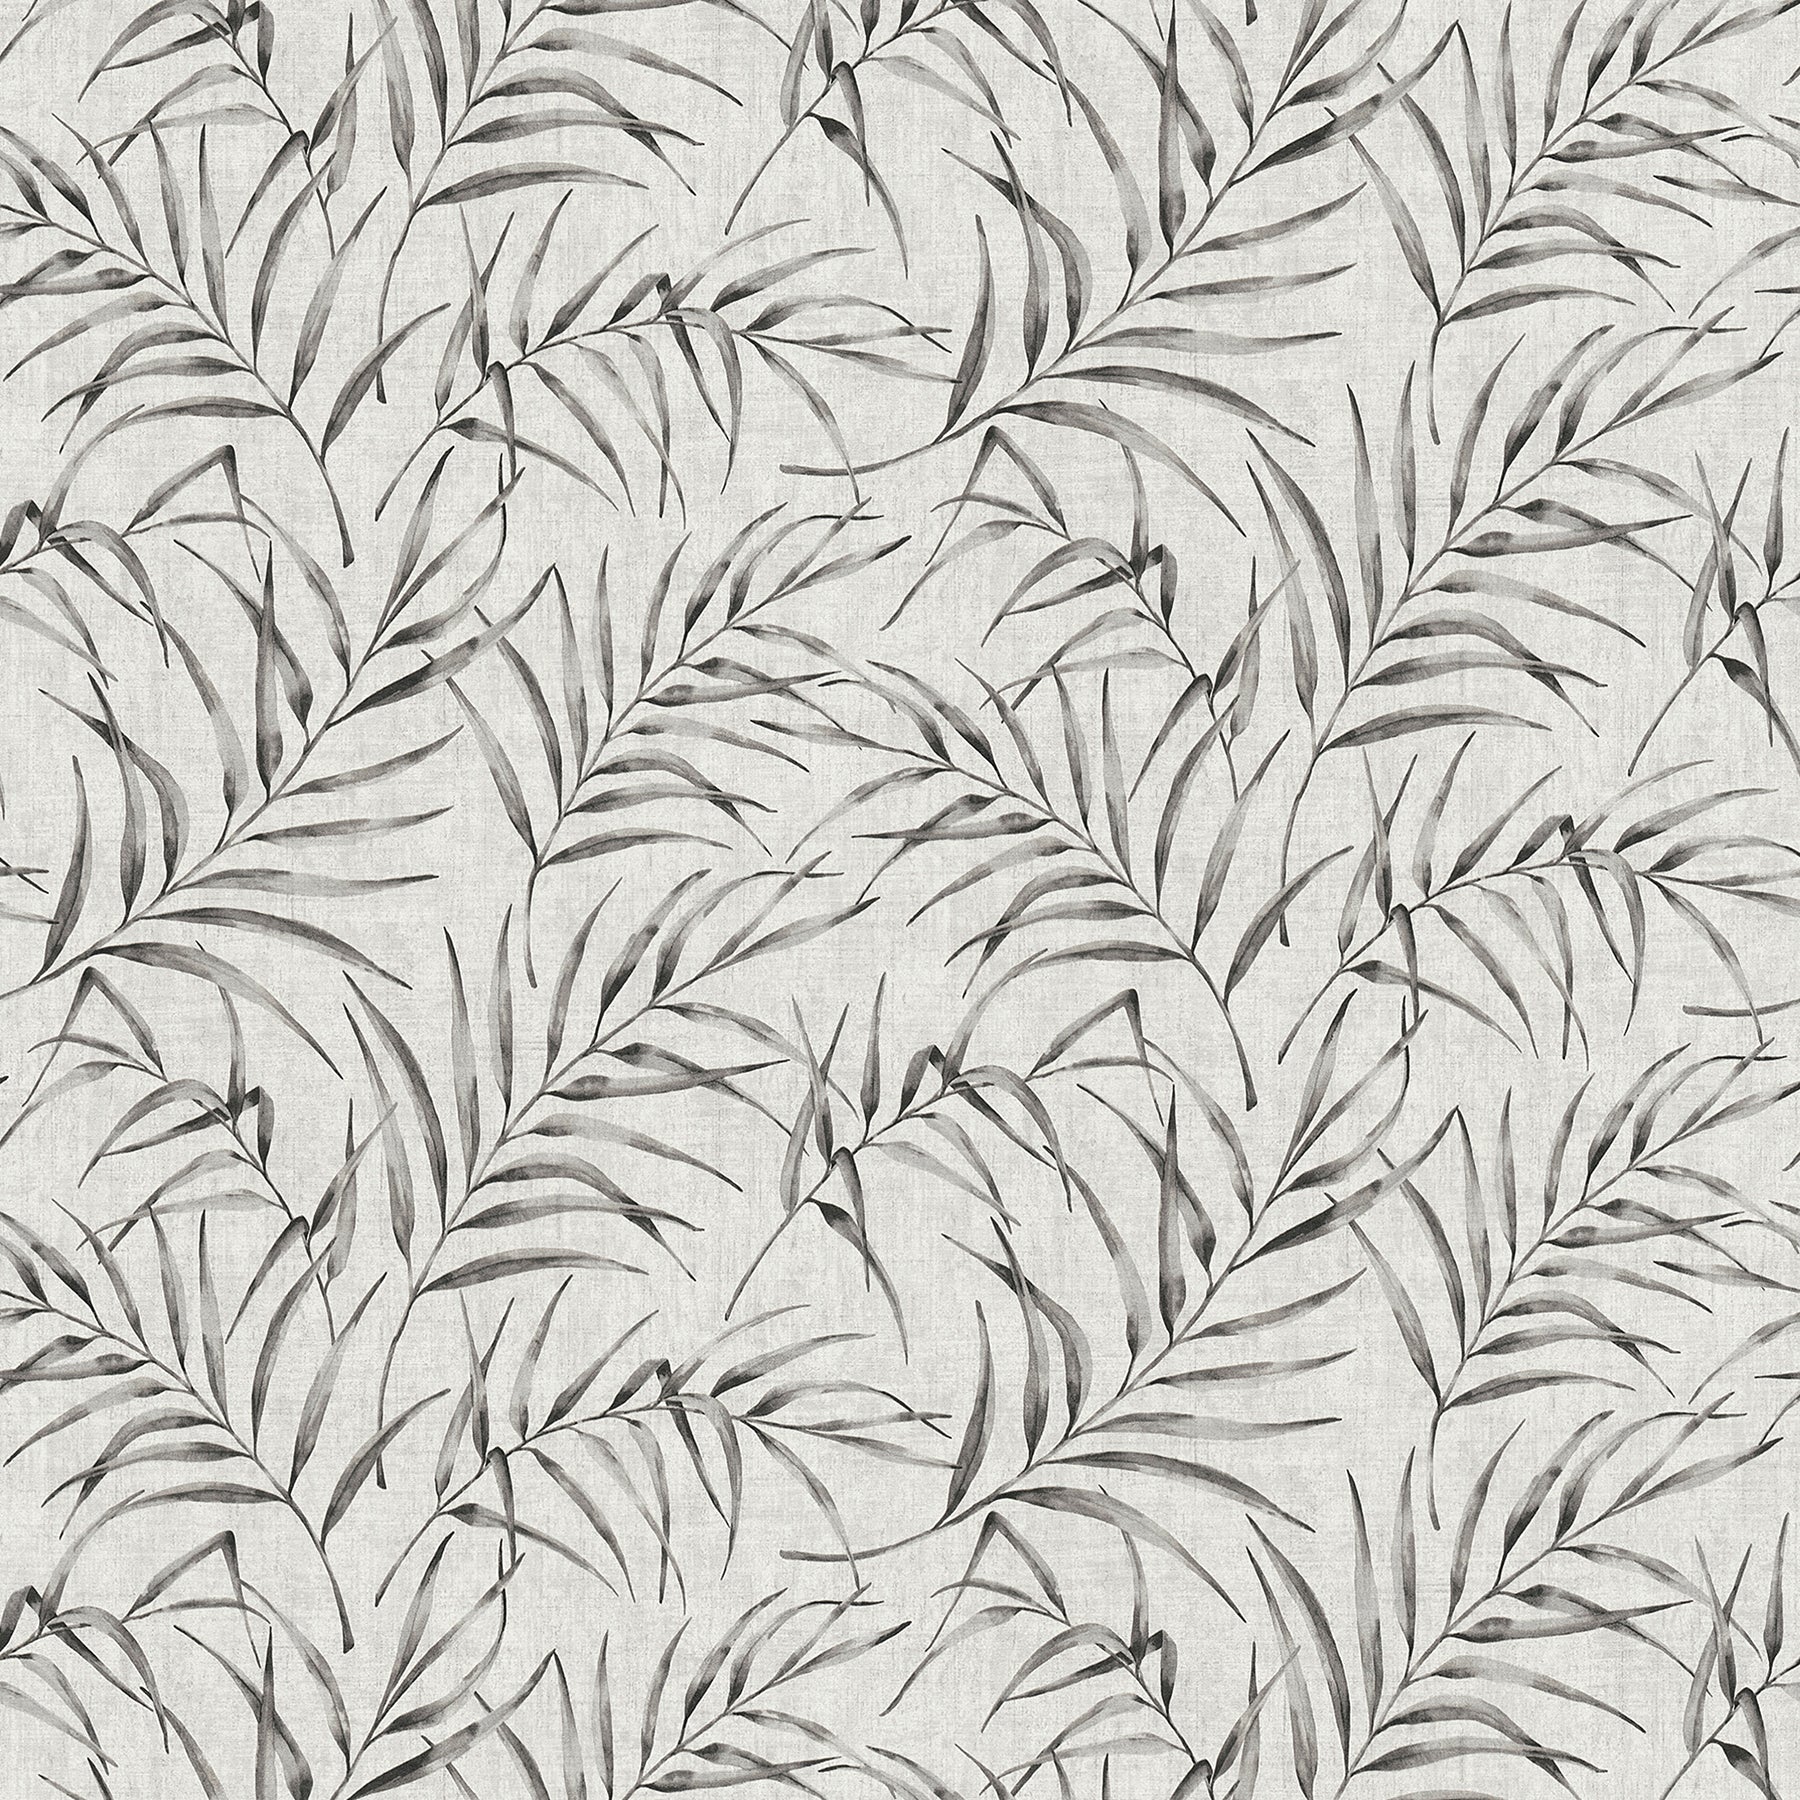 Looking 2979-37335-2 Bali Lani Grey Fronds Grey by Advantage Wallpaper